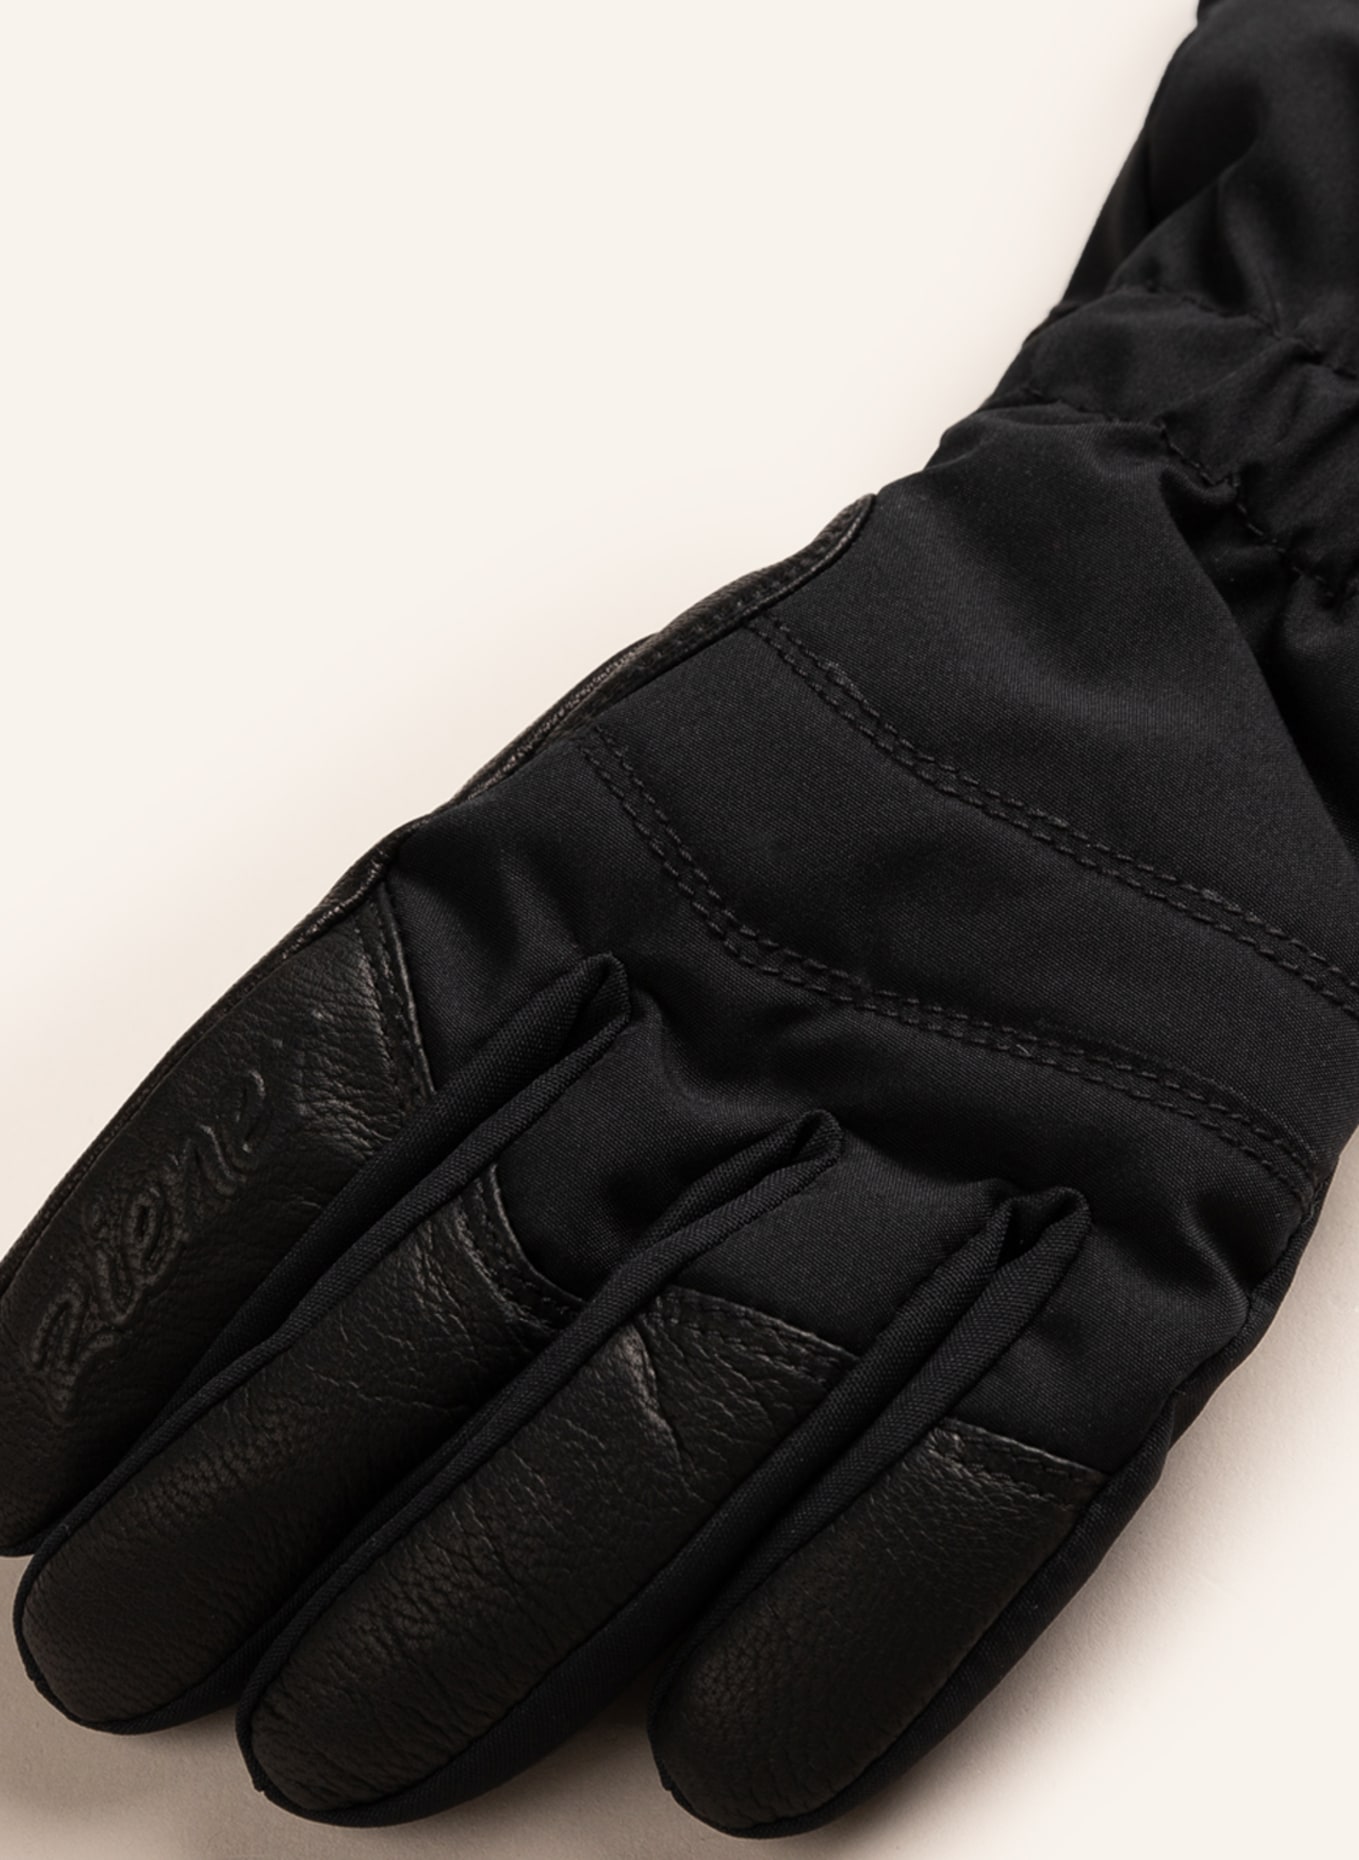 ziener Skihandschuhe KILATA mit Leder in schwarz | Handschuhe